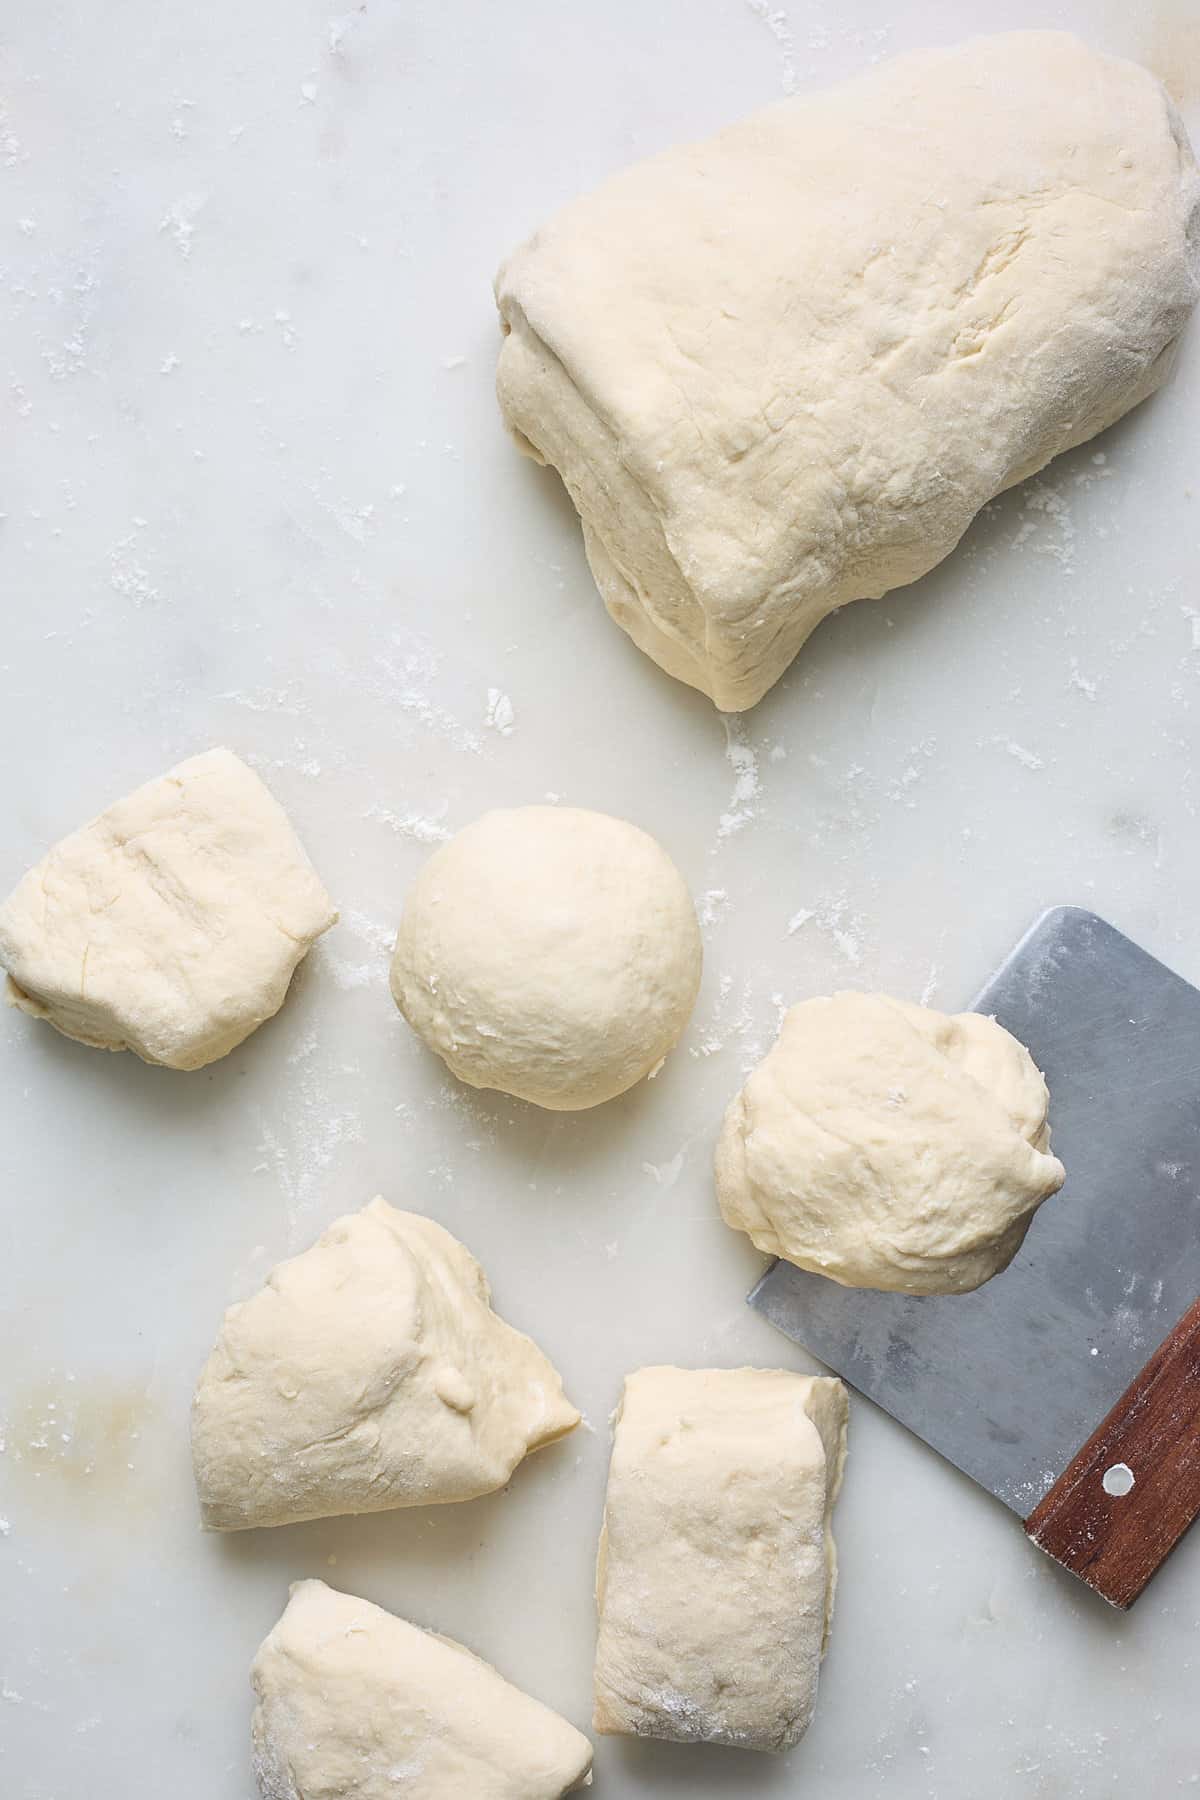 A bench scraper cutting dough into balls